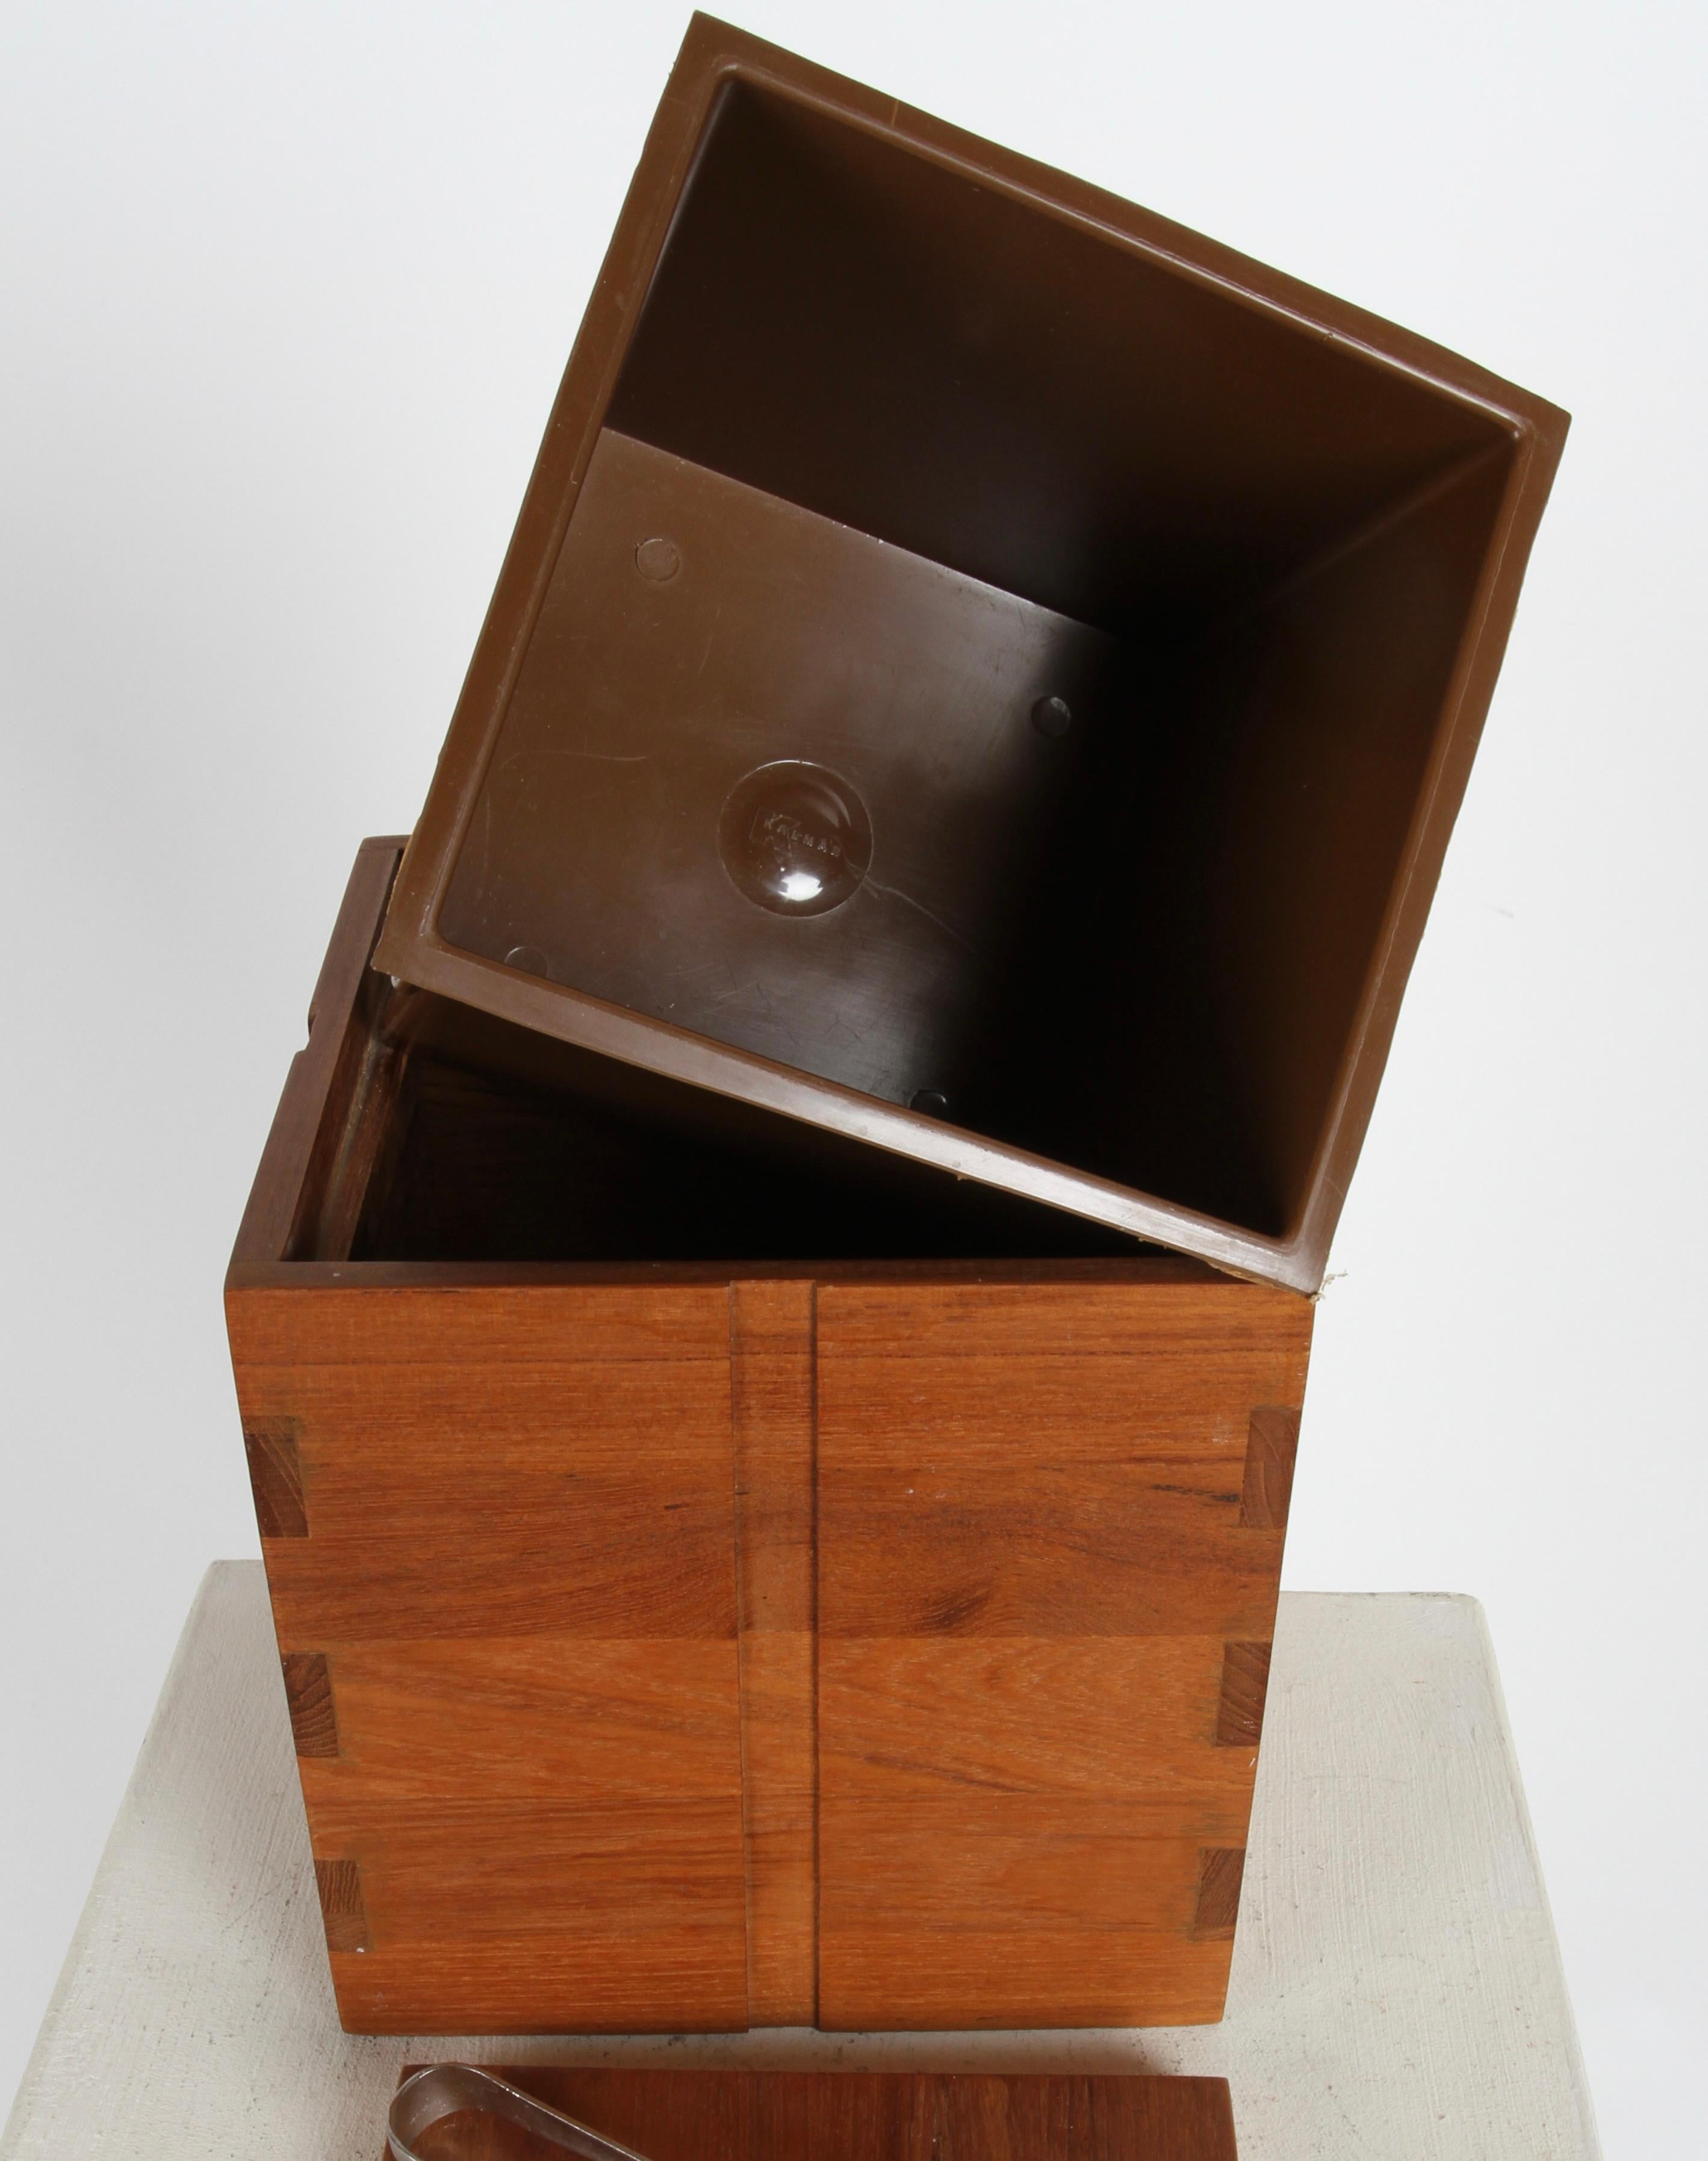 1970s Kalmar Designs Teak Wood Ice Bucket with Thongs - Danish Modern Style - For Sale 4